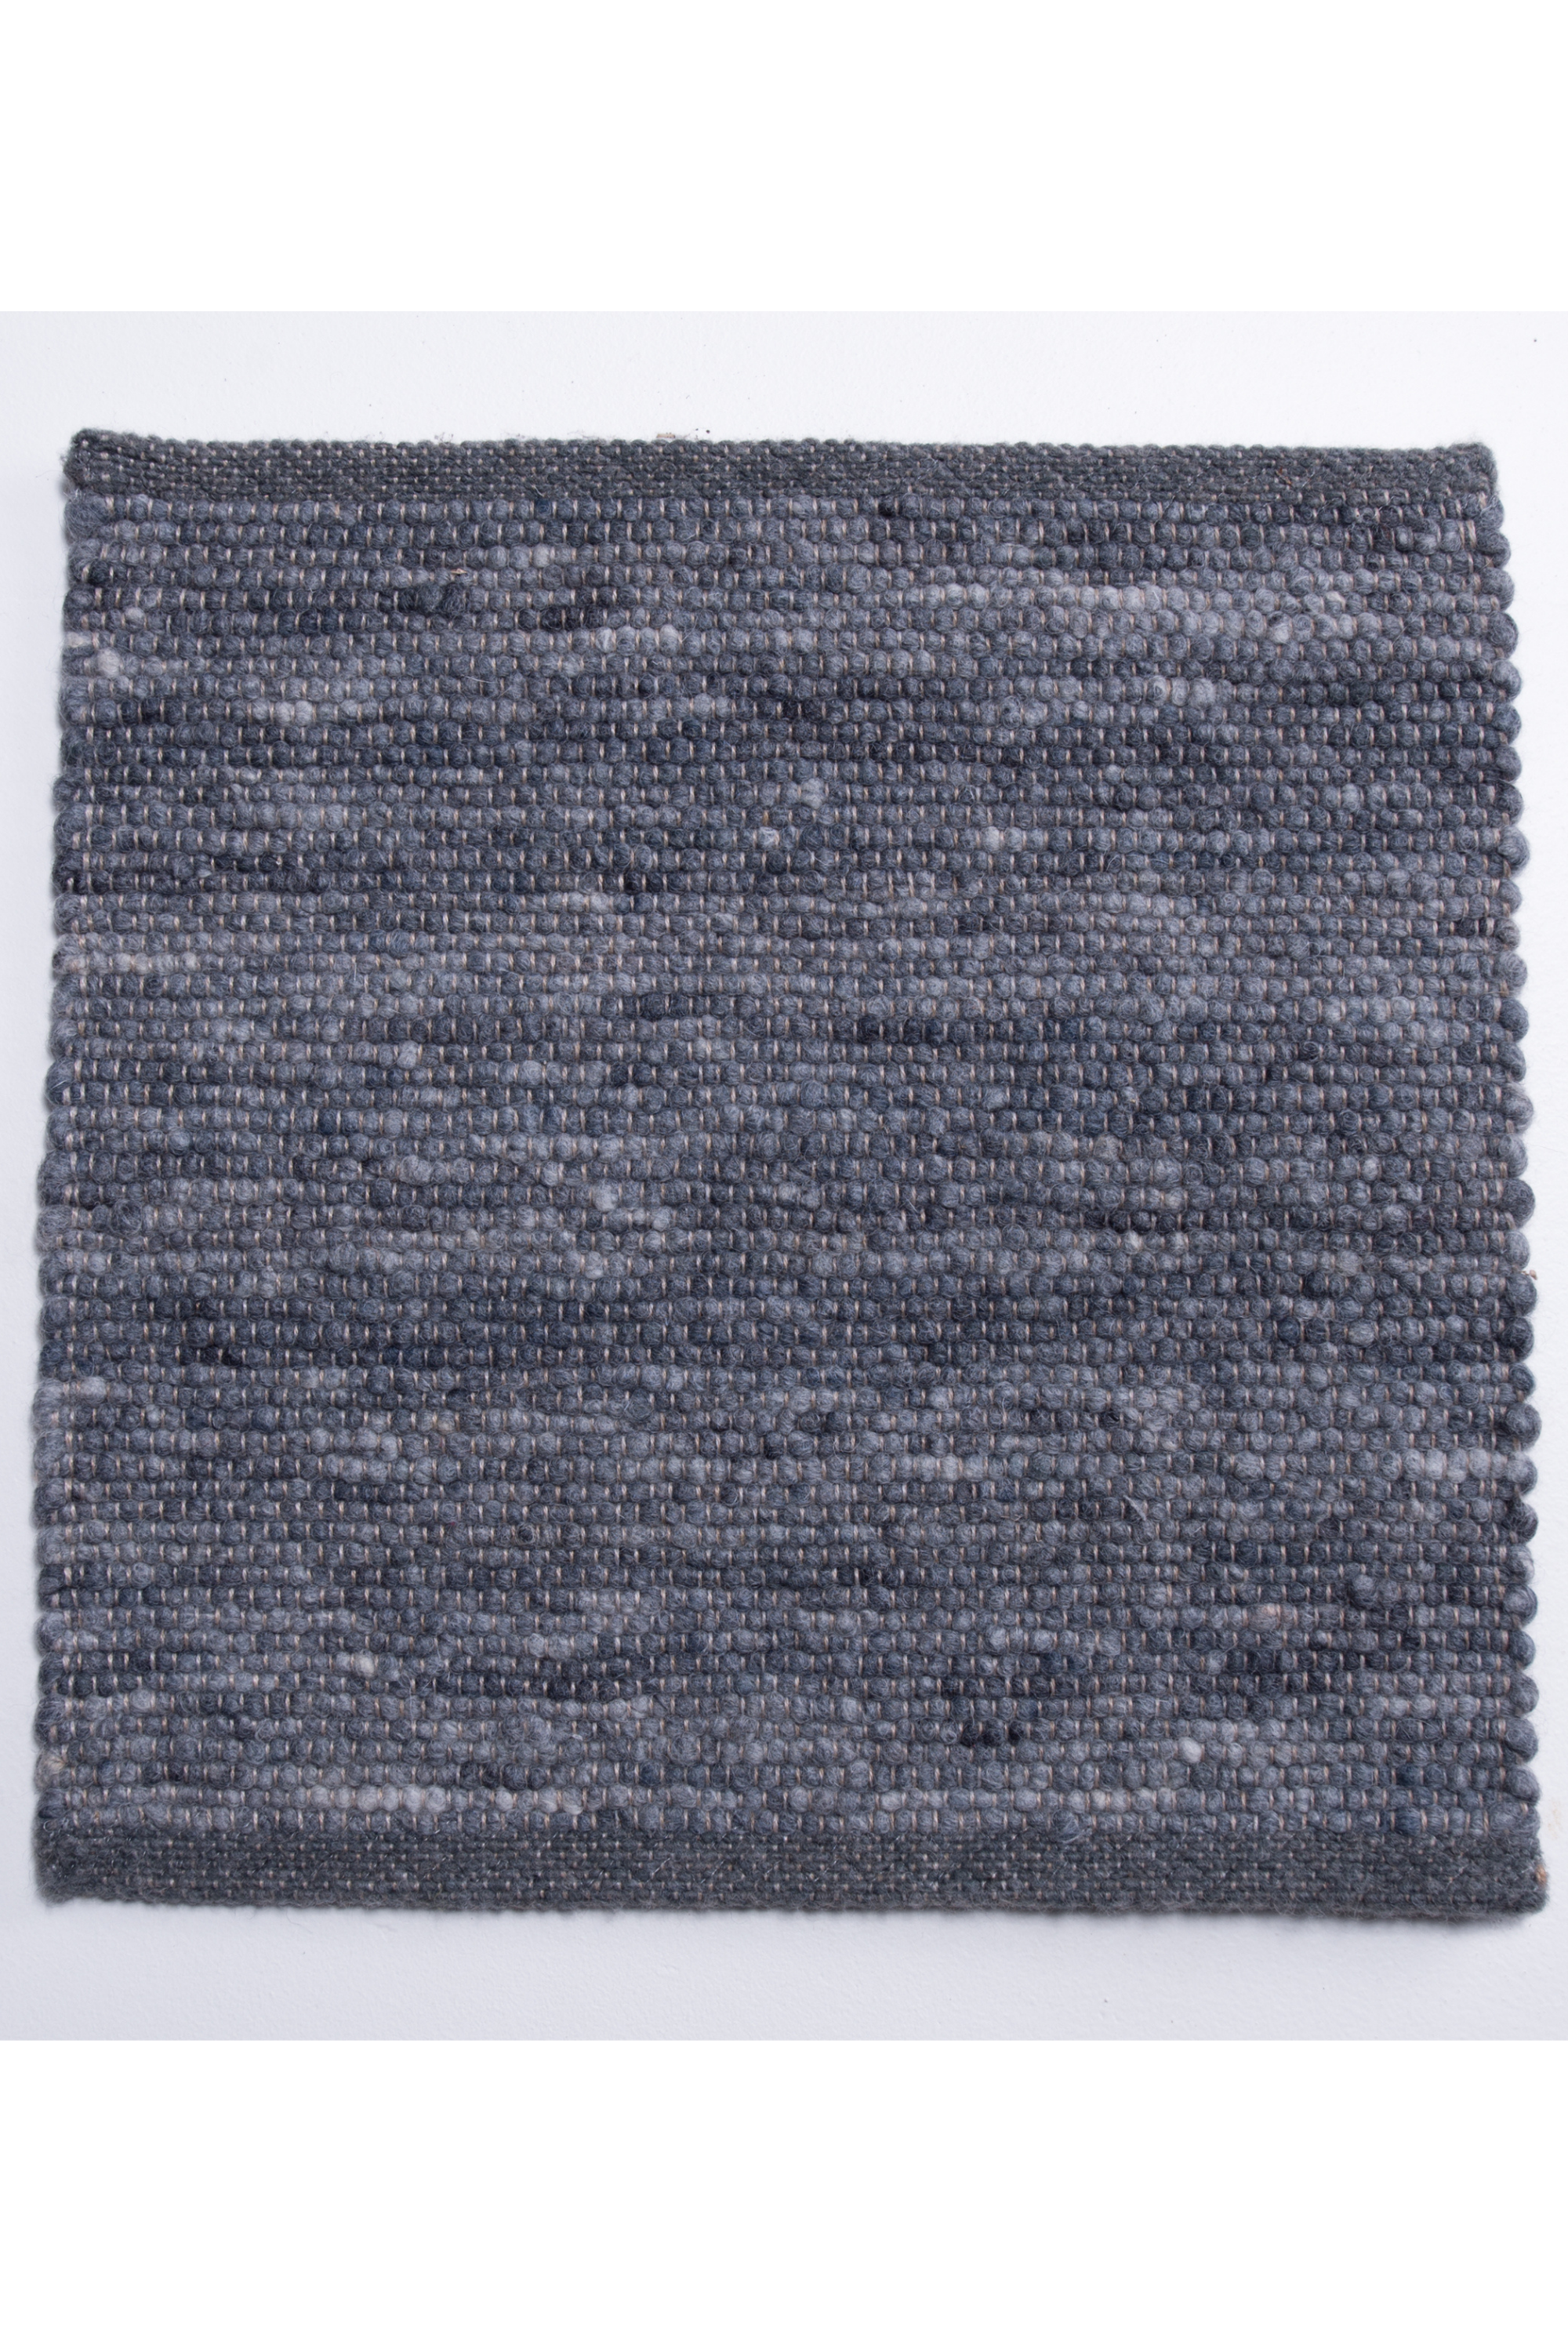 Grey luxury plain handwoven rug